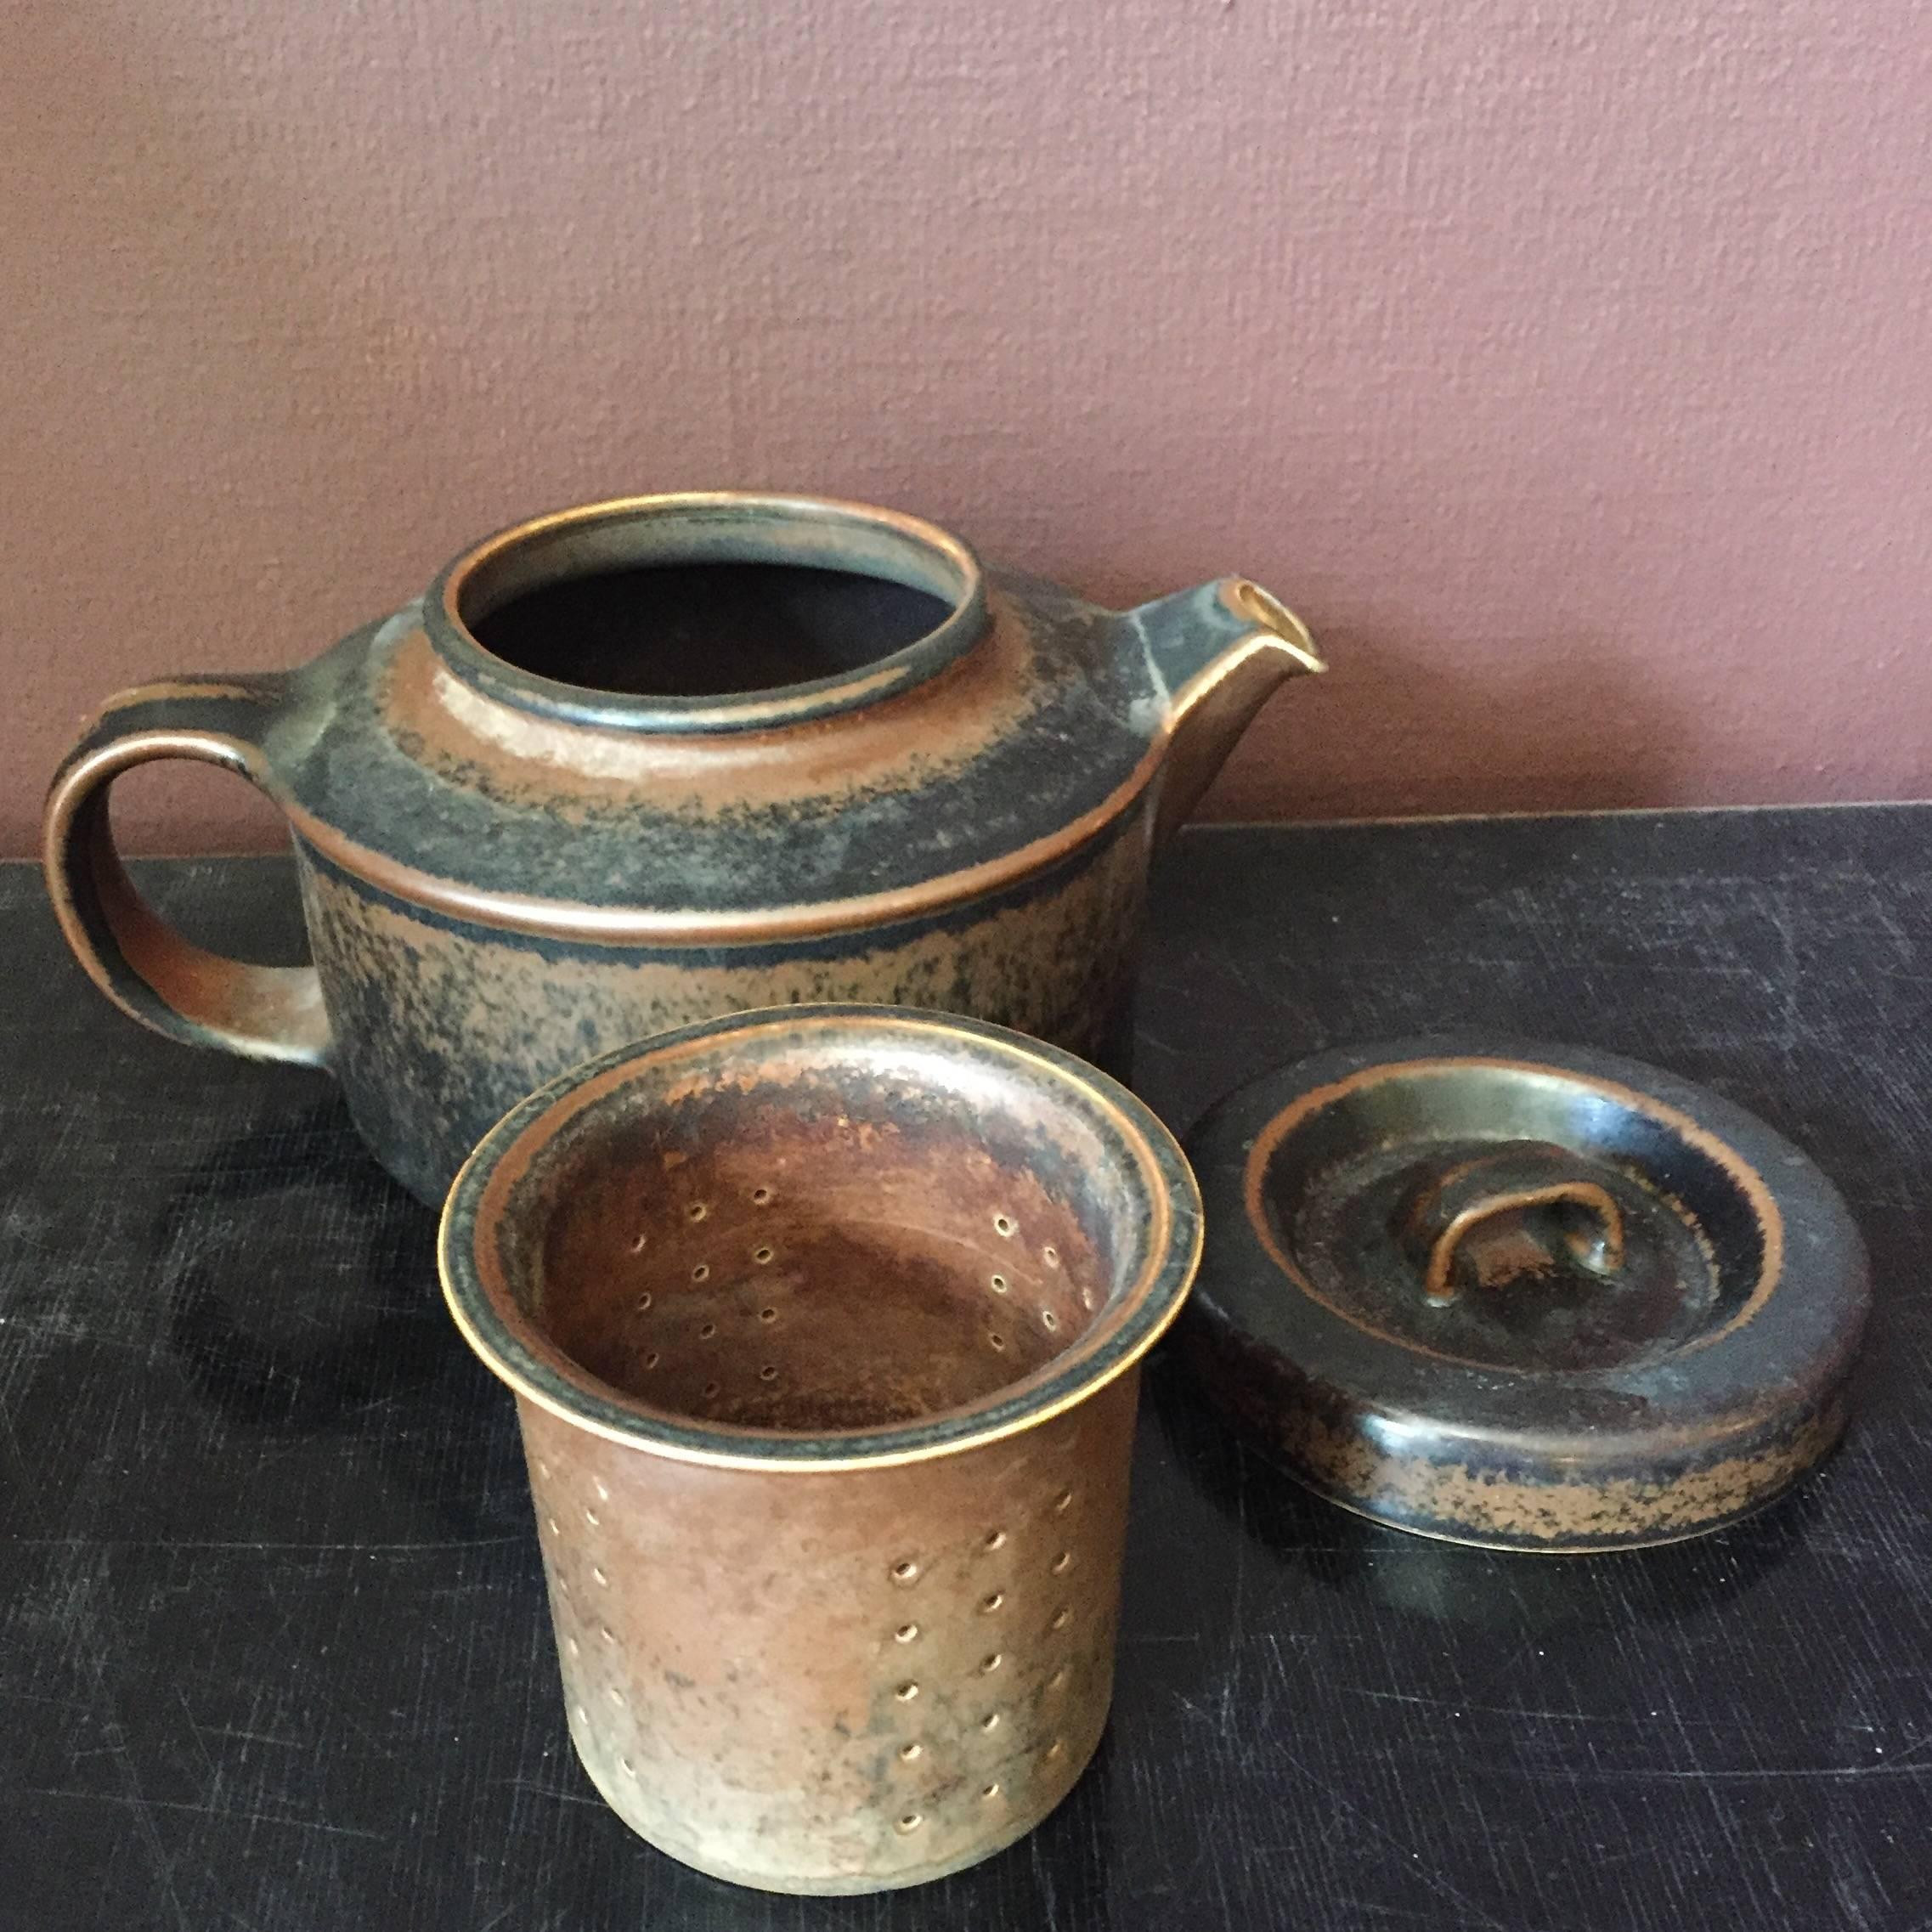 Finnish Ruska from Arabia, Brown Stoneware, Tea Pot, Sugar Bowl and Milk Jug